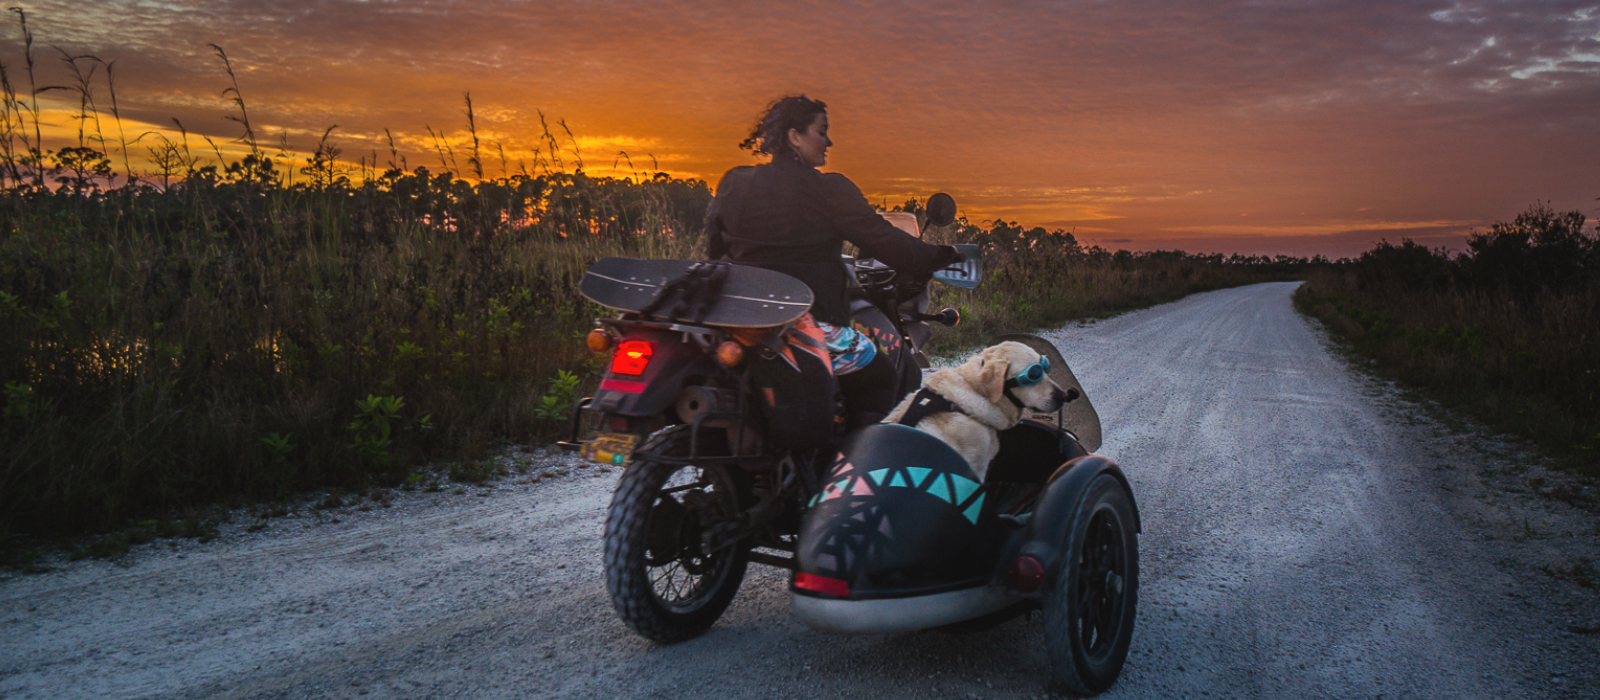 Mallory & Baylor the Sidecar Dog Sunset Ride